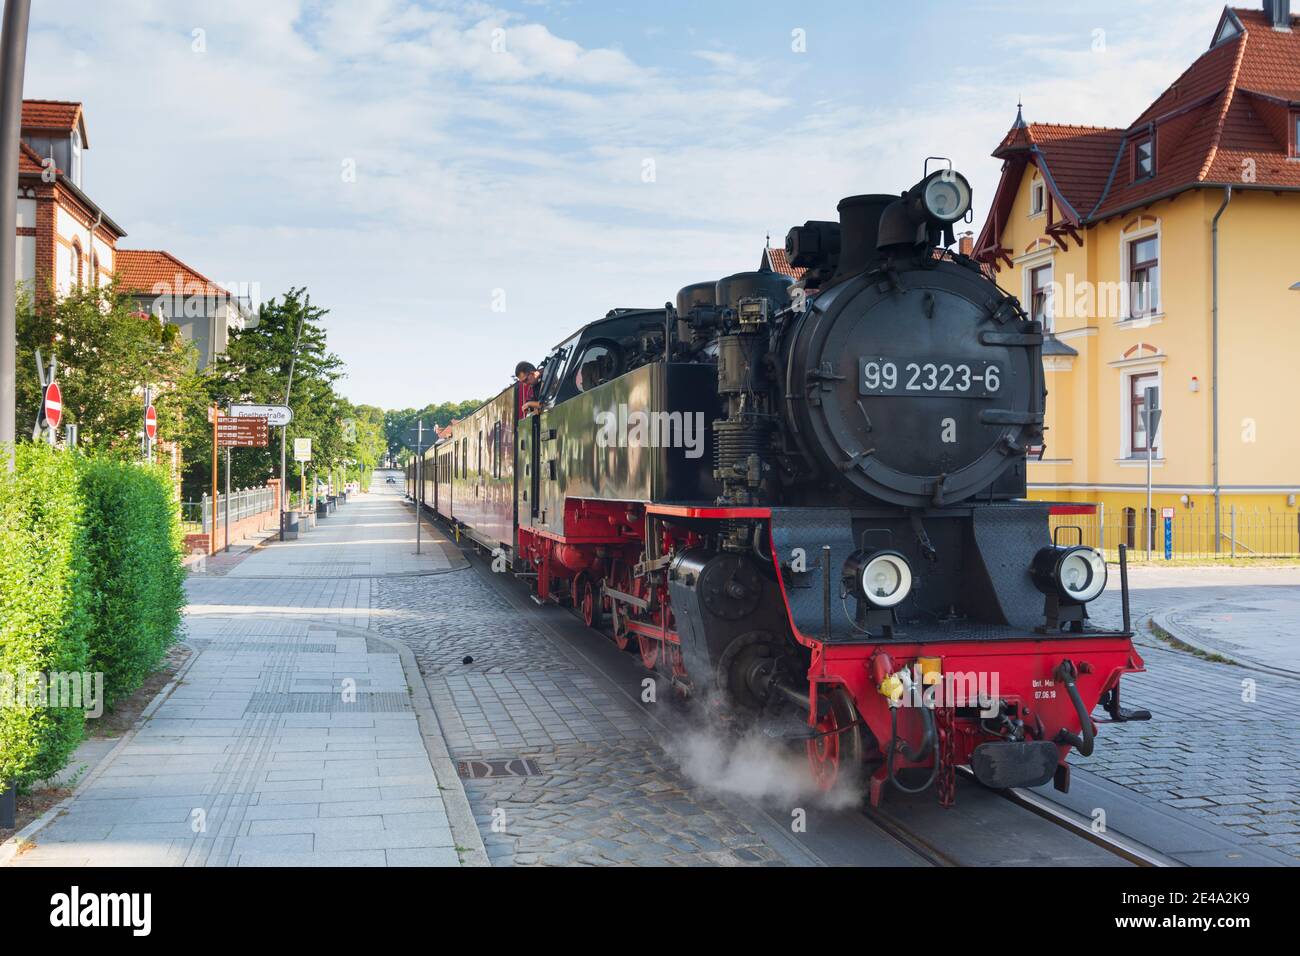 Bad Doberan, Bäderbahn Molli railway, steam locomotive, stop at street Goethestrasse, villas, Ostsee (Baltic Sea), Mecklenburg-Vorpommern / Mecklenburg-Western Pomerania, Germany Stock Photo